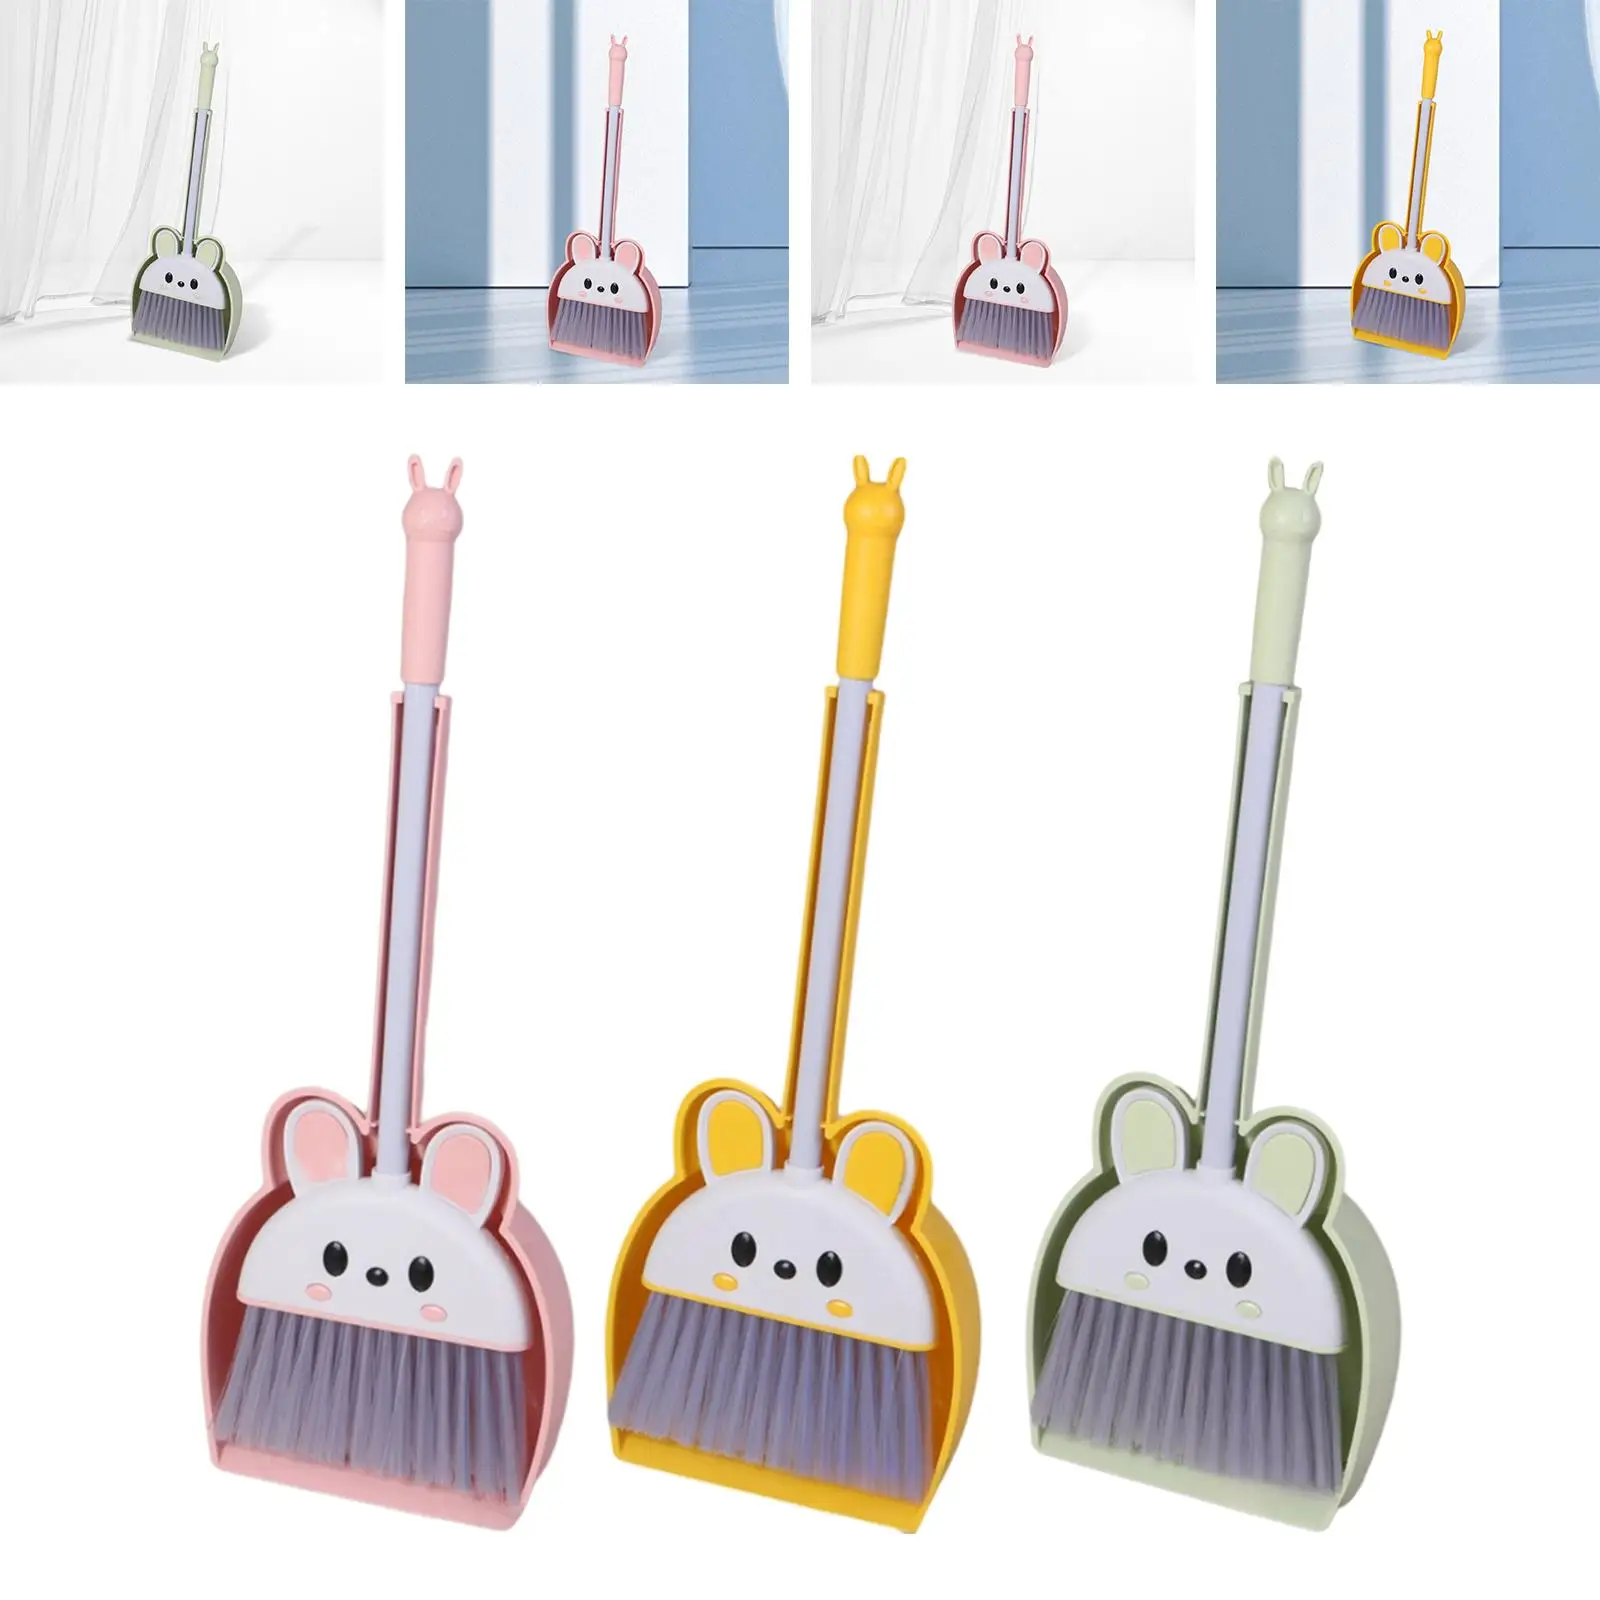 Mini Broom and Dustpan Set for Kids Pretend Play for Kindergarten Boys Girls